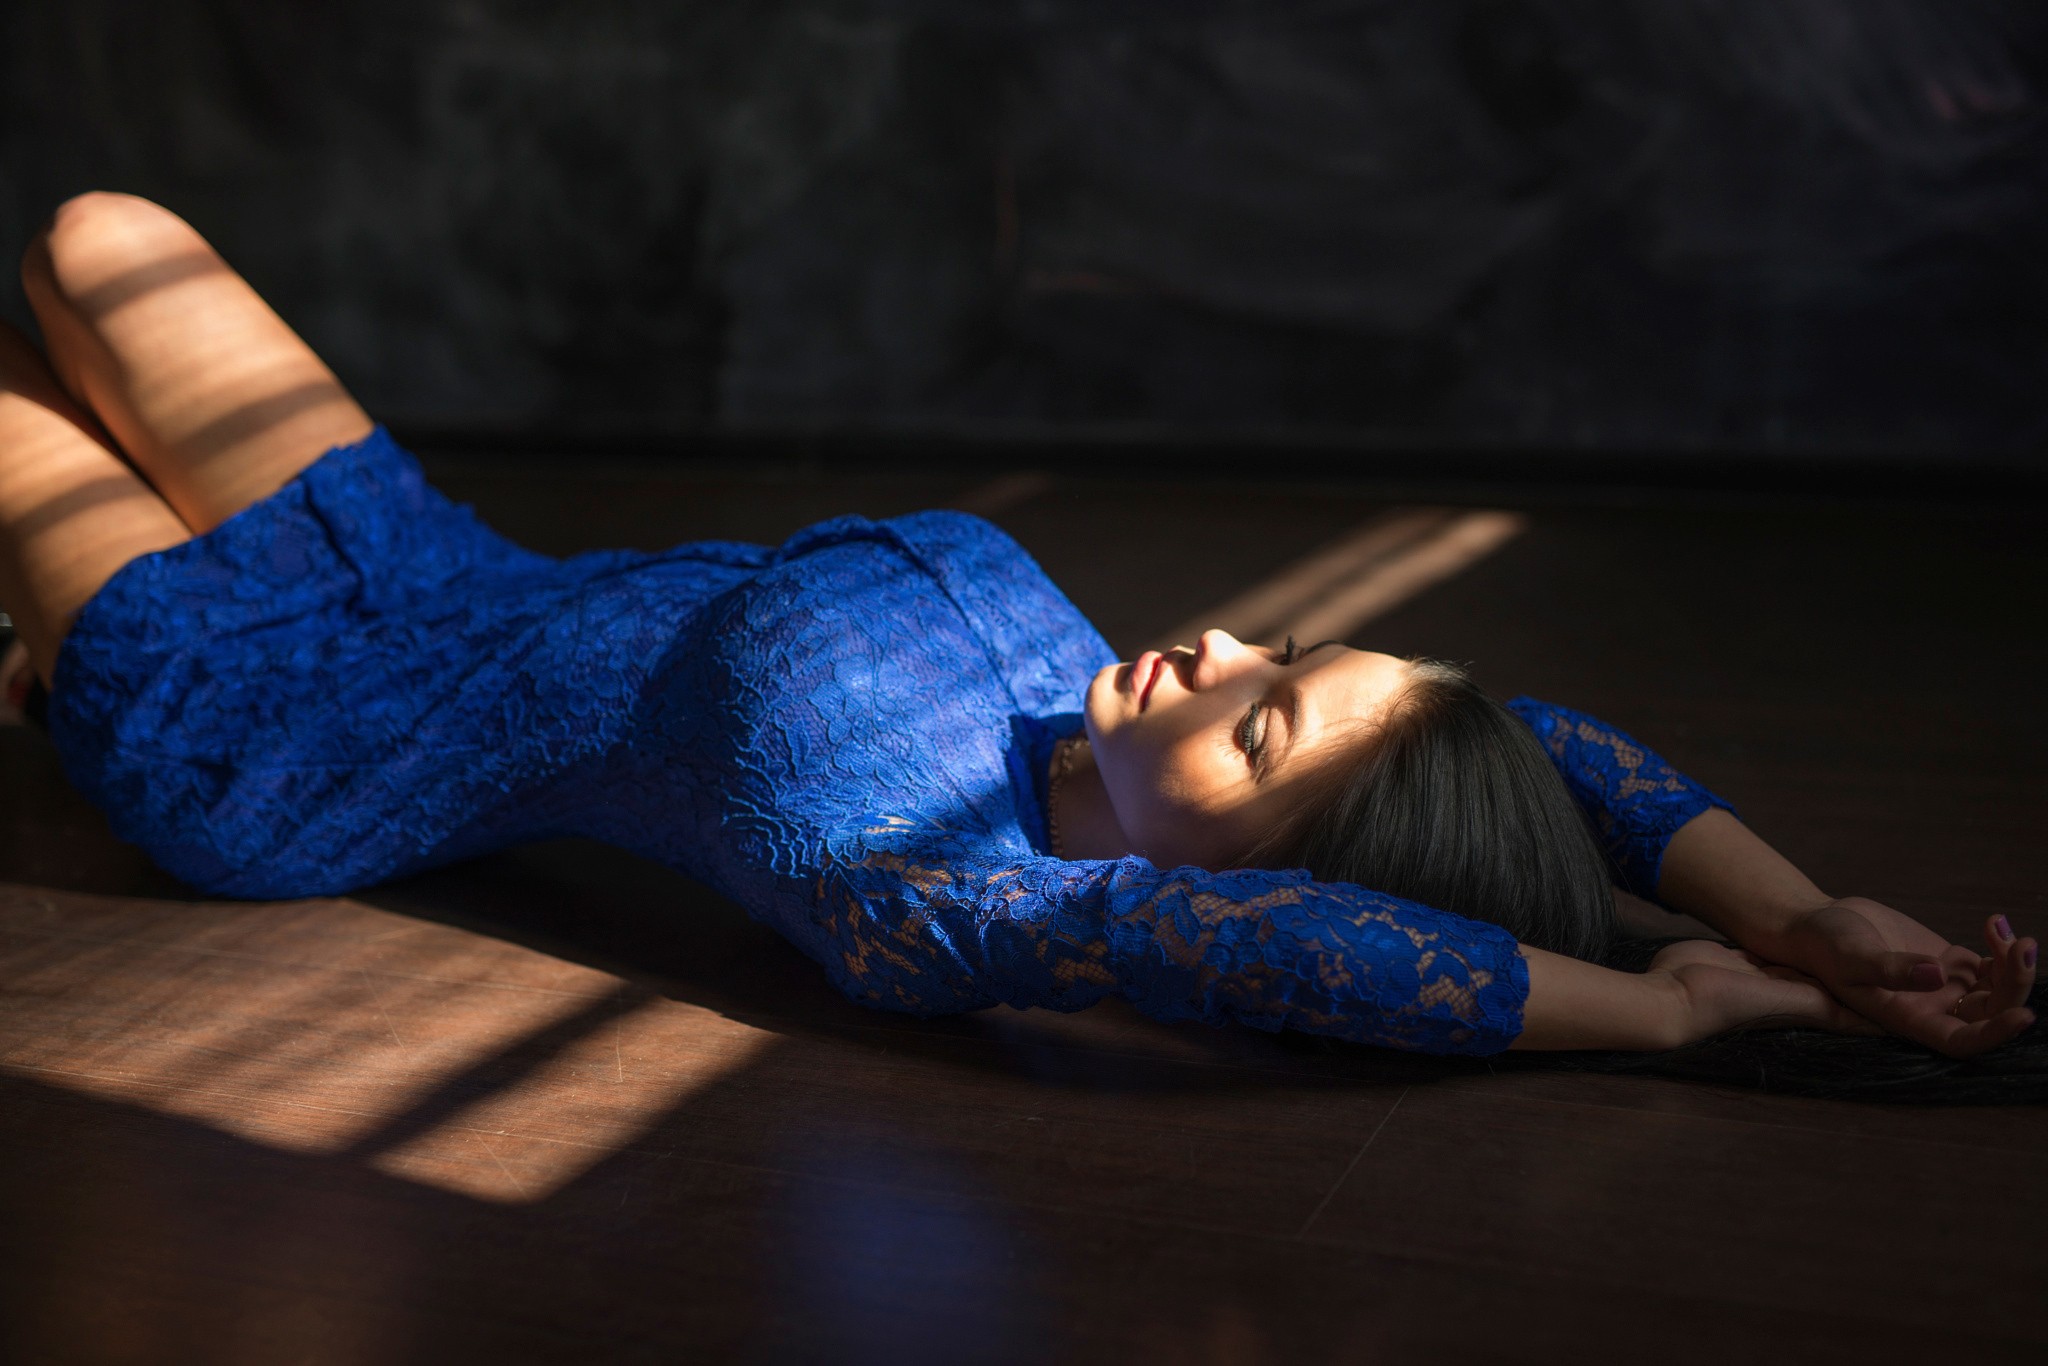 Women Model Brunette Long Hair Blue Dress On The Floor Sunlight Shadow Wooden Surface Marina Shimkov 2048x1366